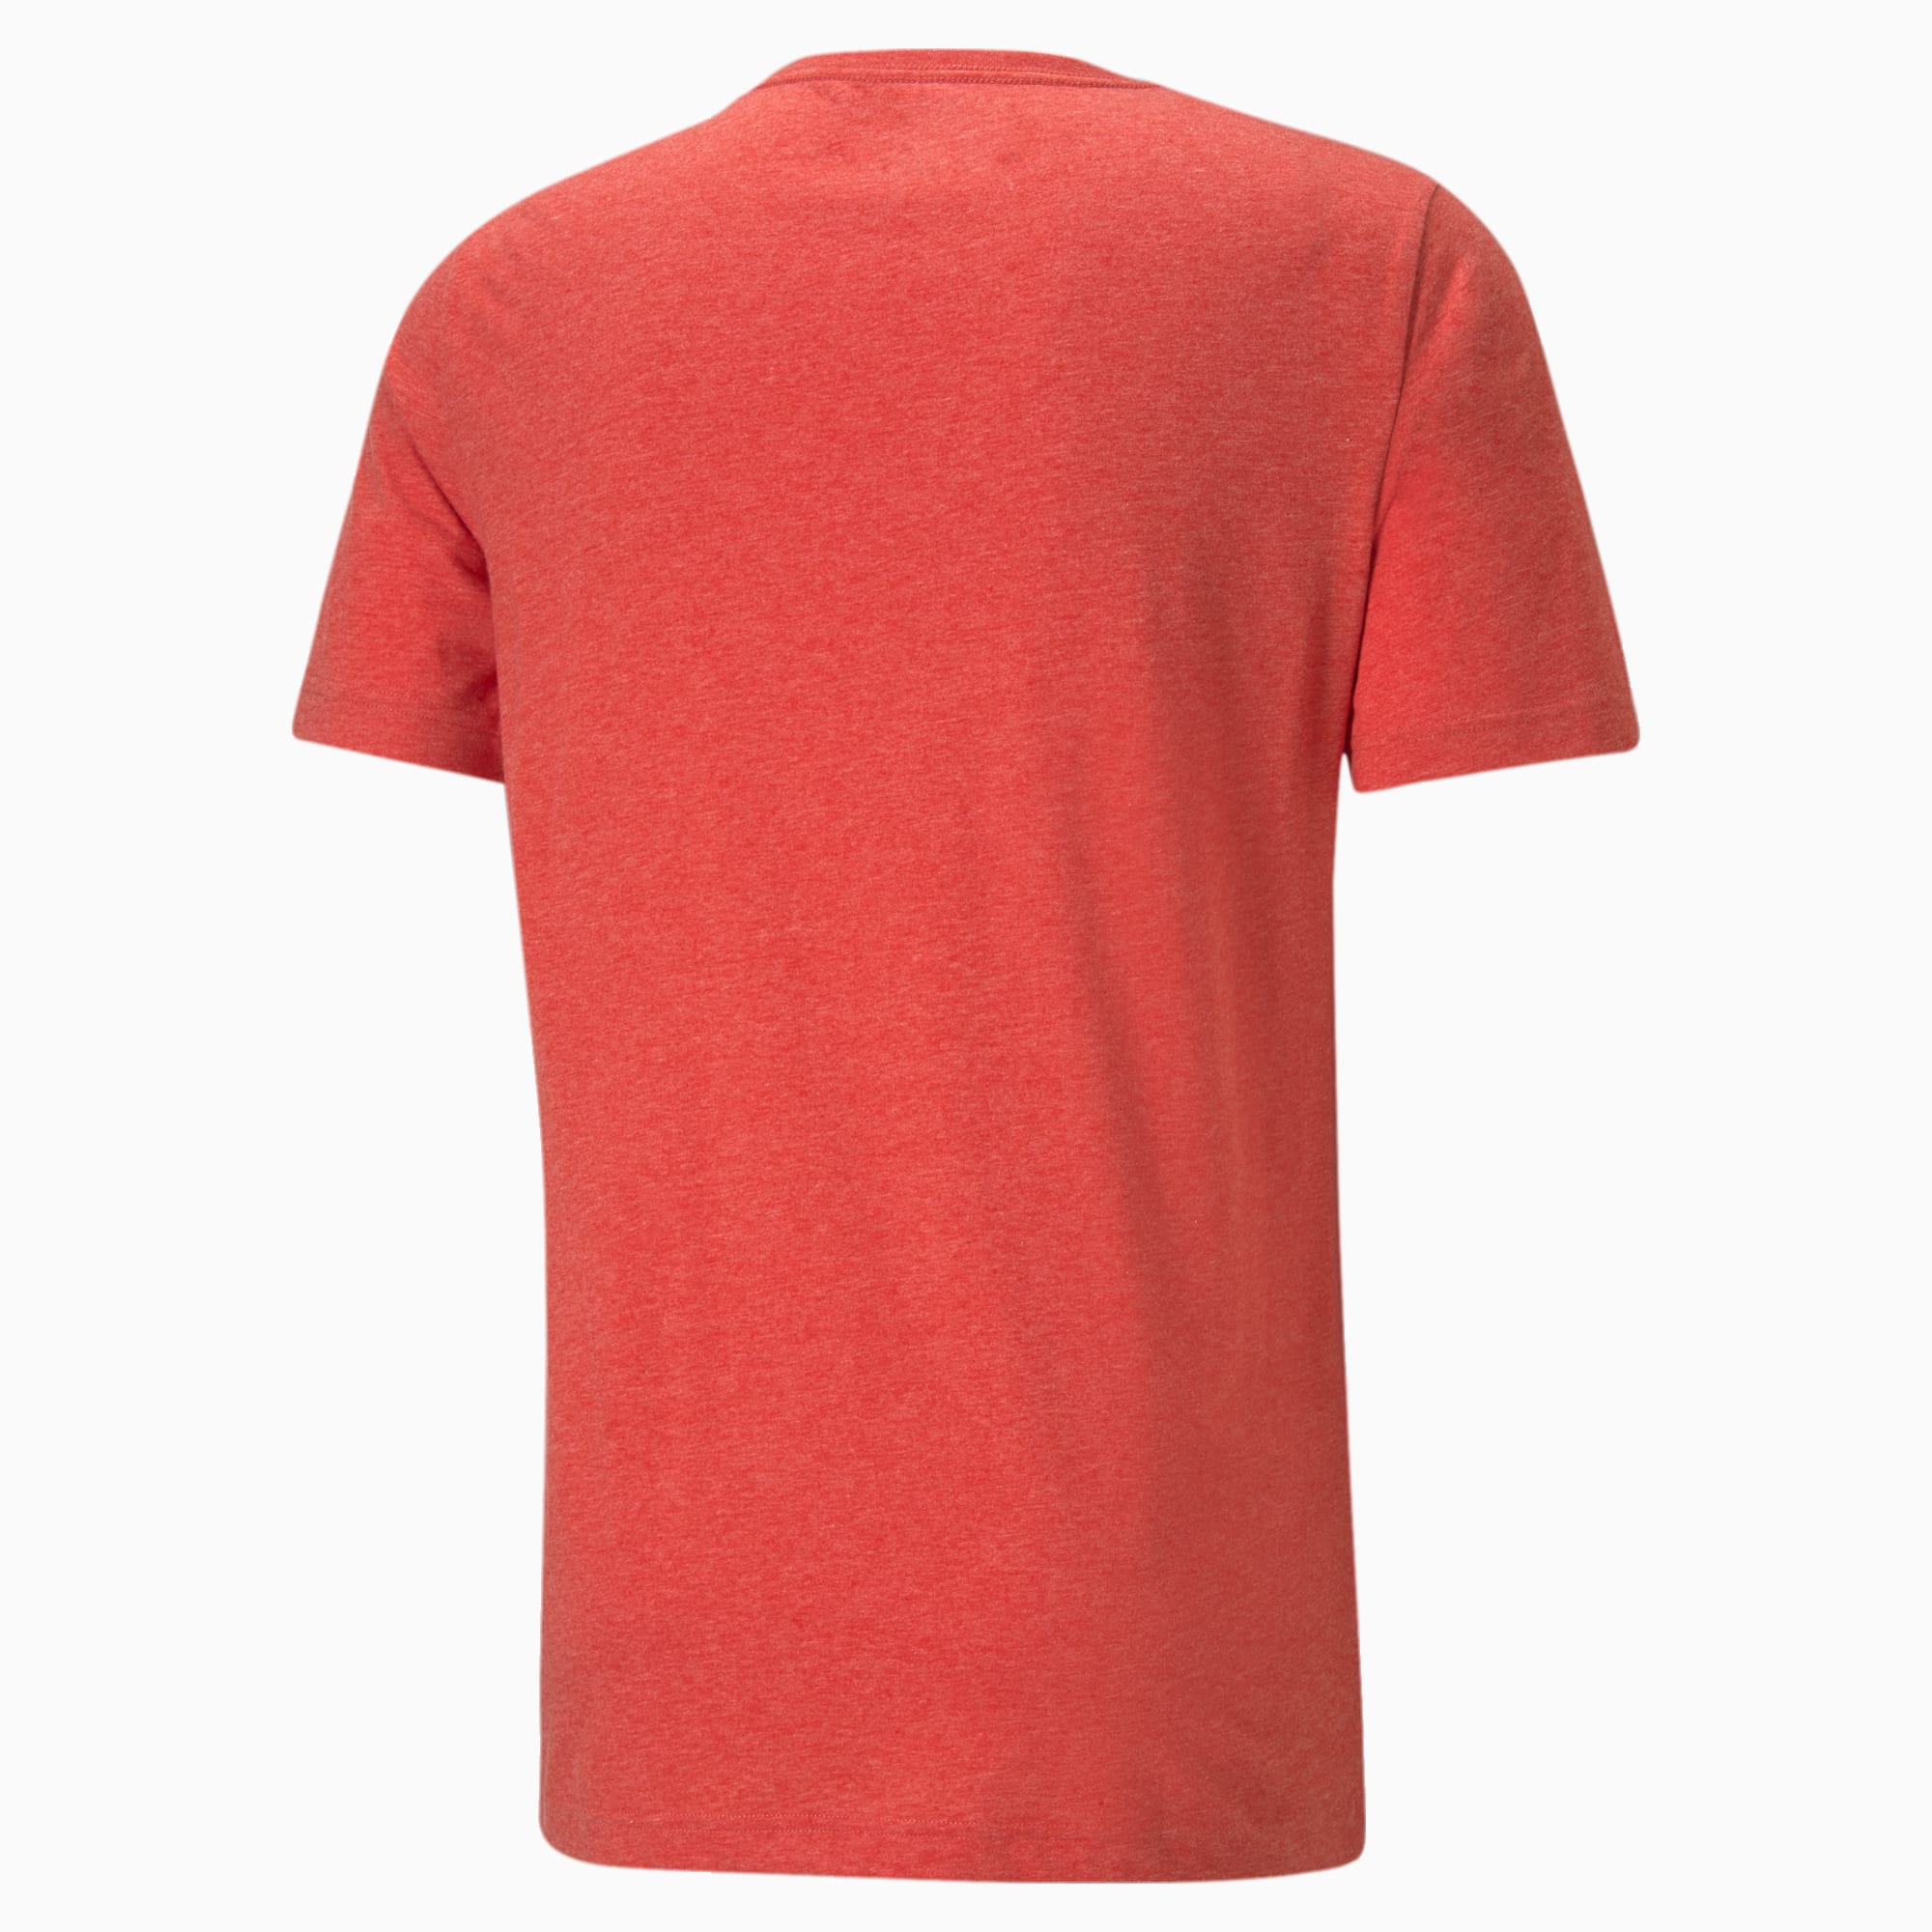 PUMA Essentials Heather Men's T-Shirt, High Risk Red, Size M, Clothing